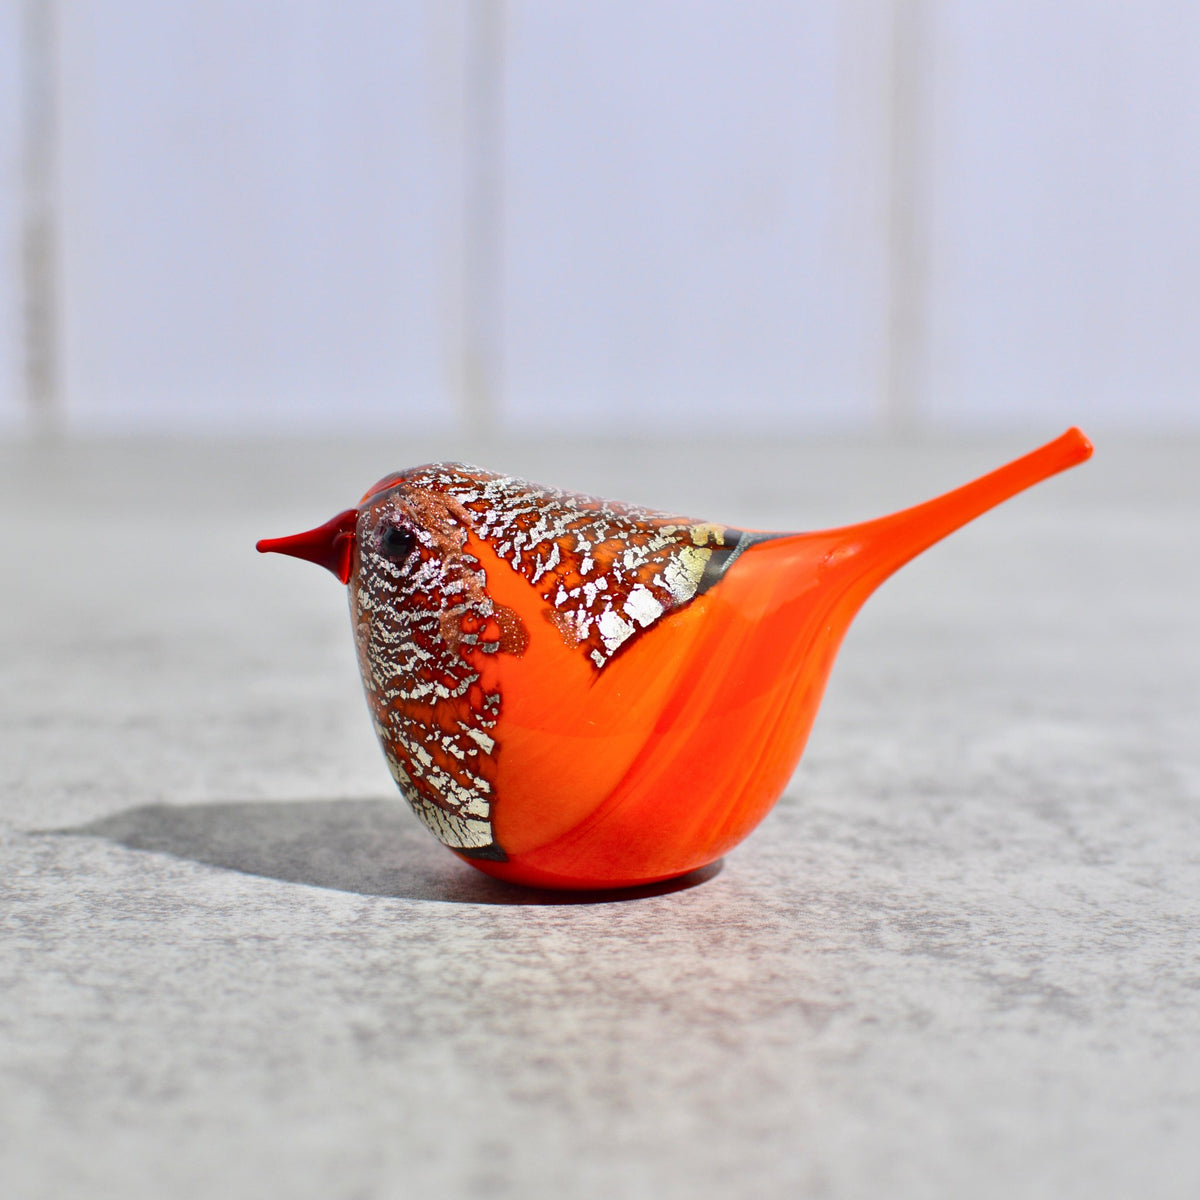 Murano Glass Coco Bird Figurine, Made in Italy - My Italian Decor